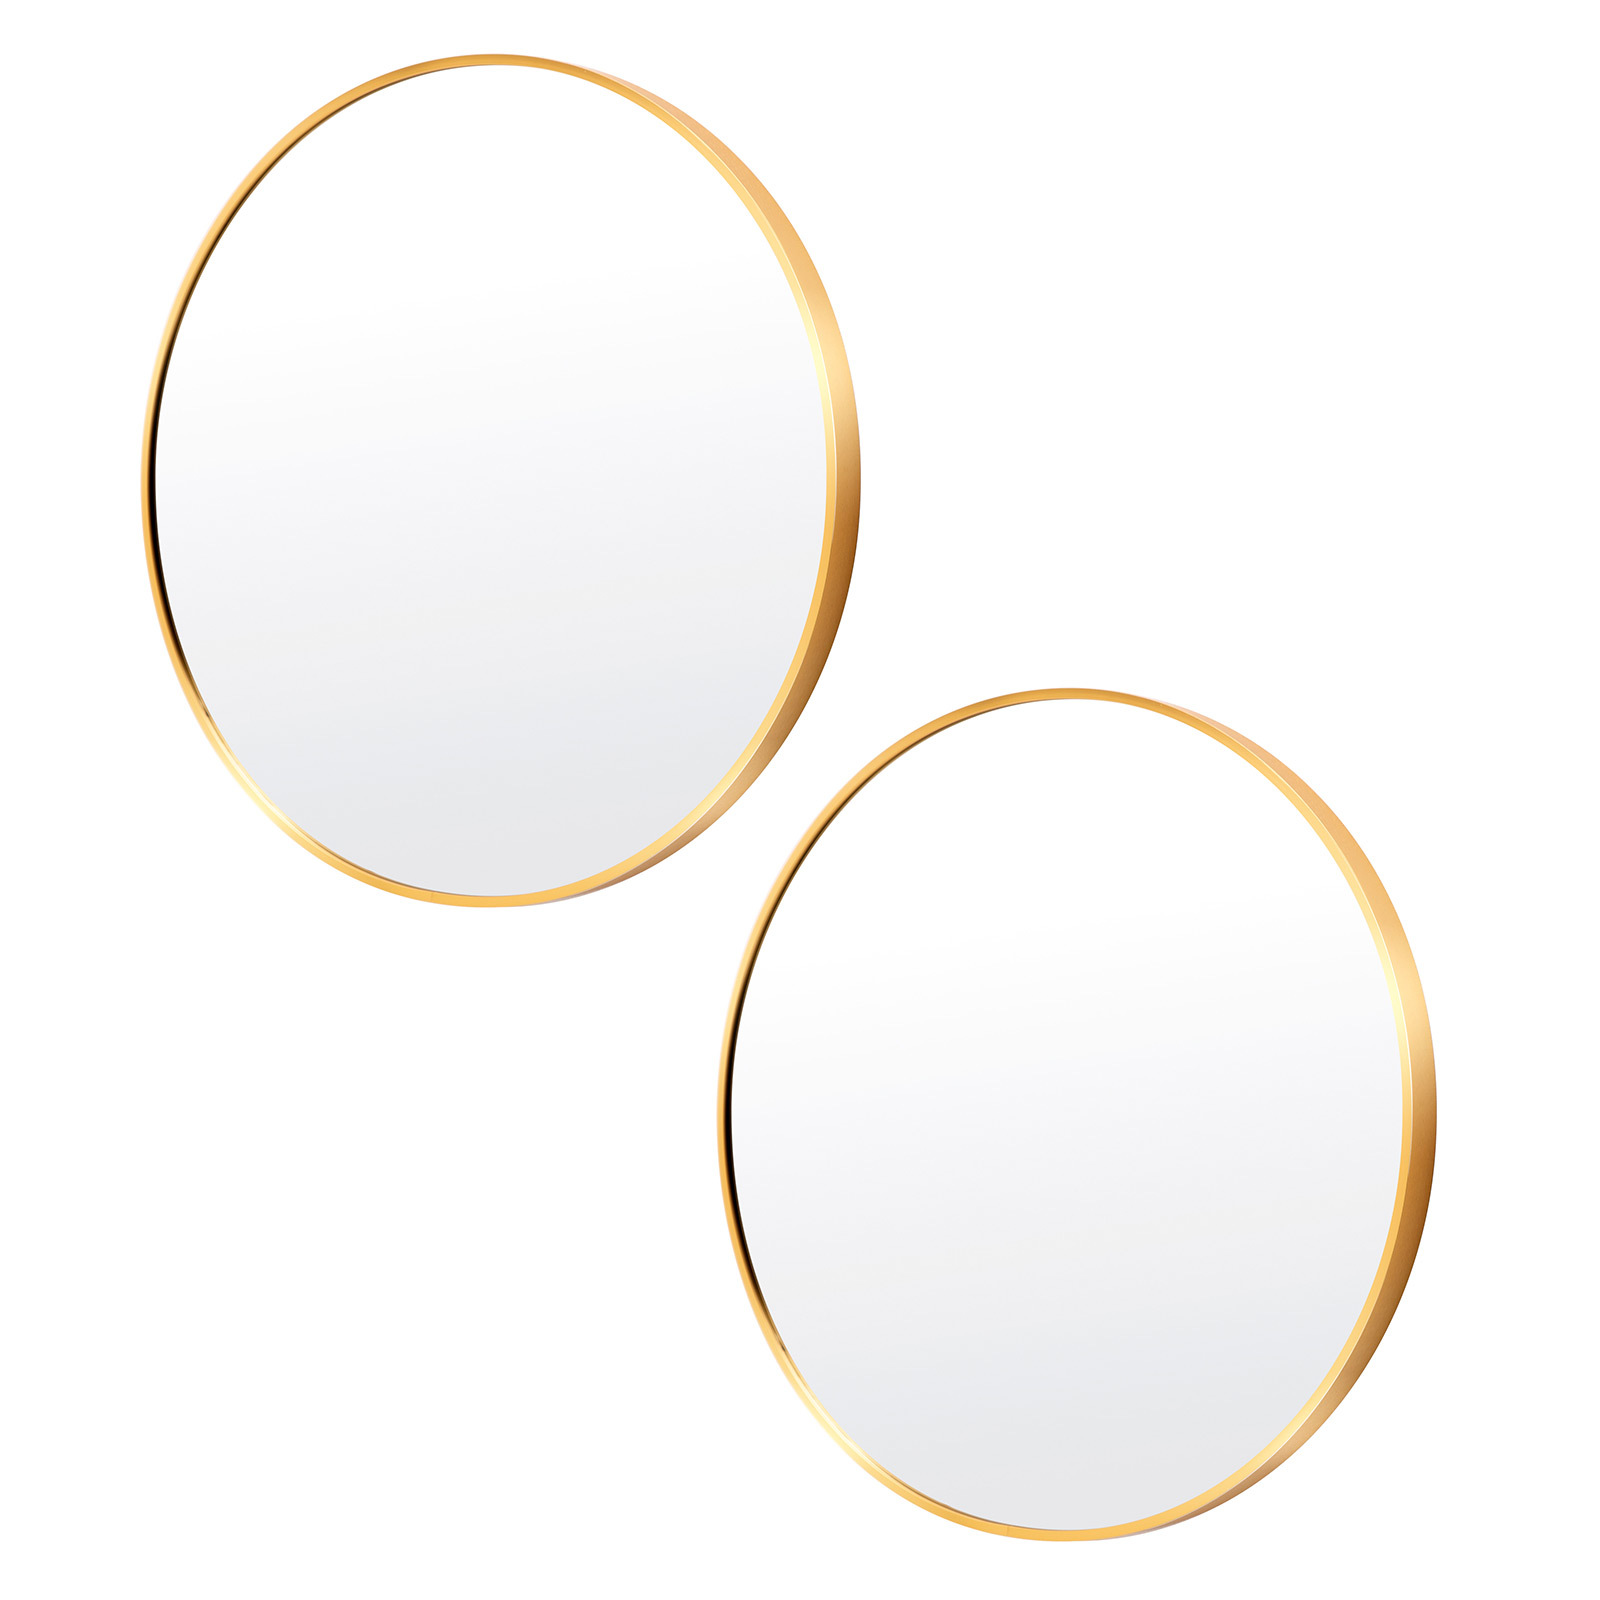 2 Set 70cm Wall Mirror Round Bathroom - GOLD